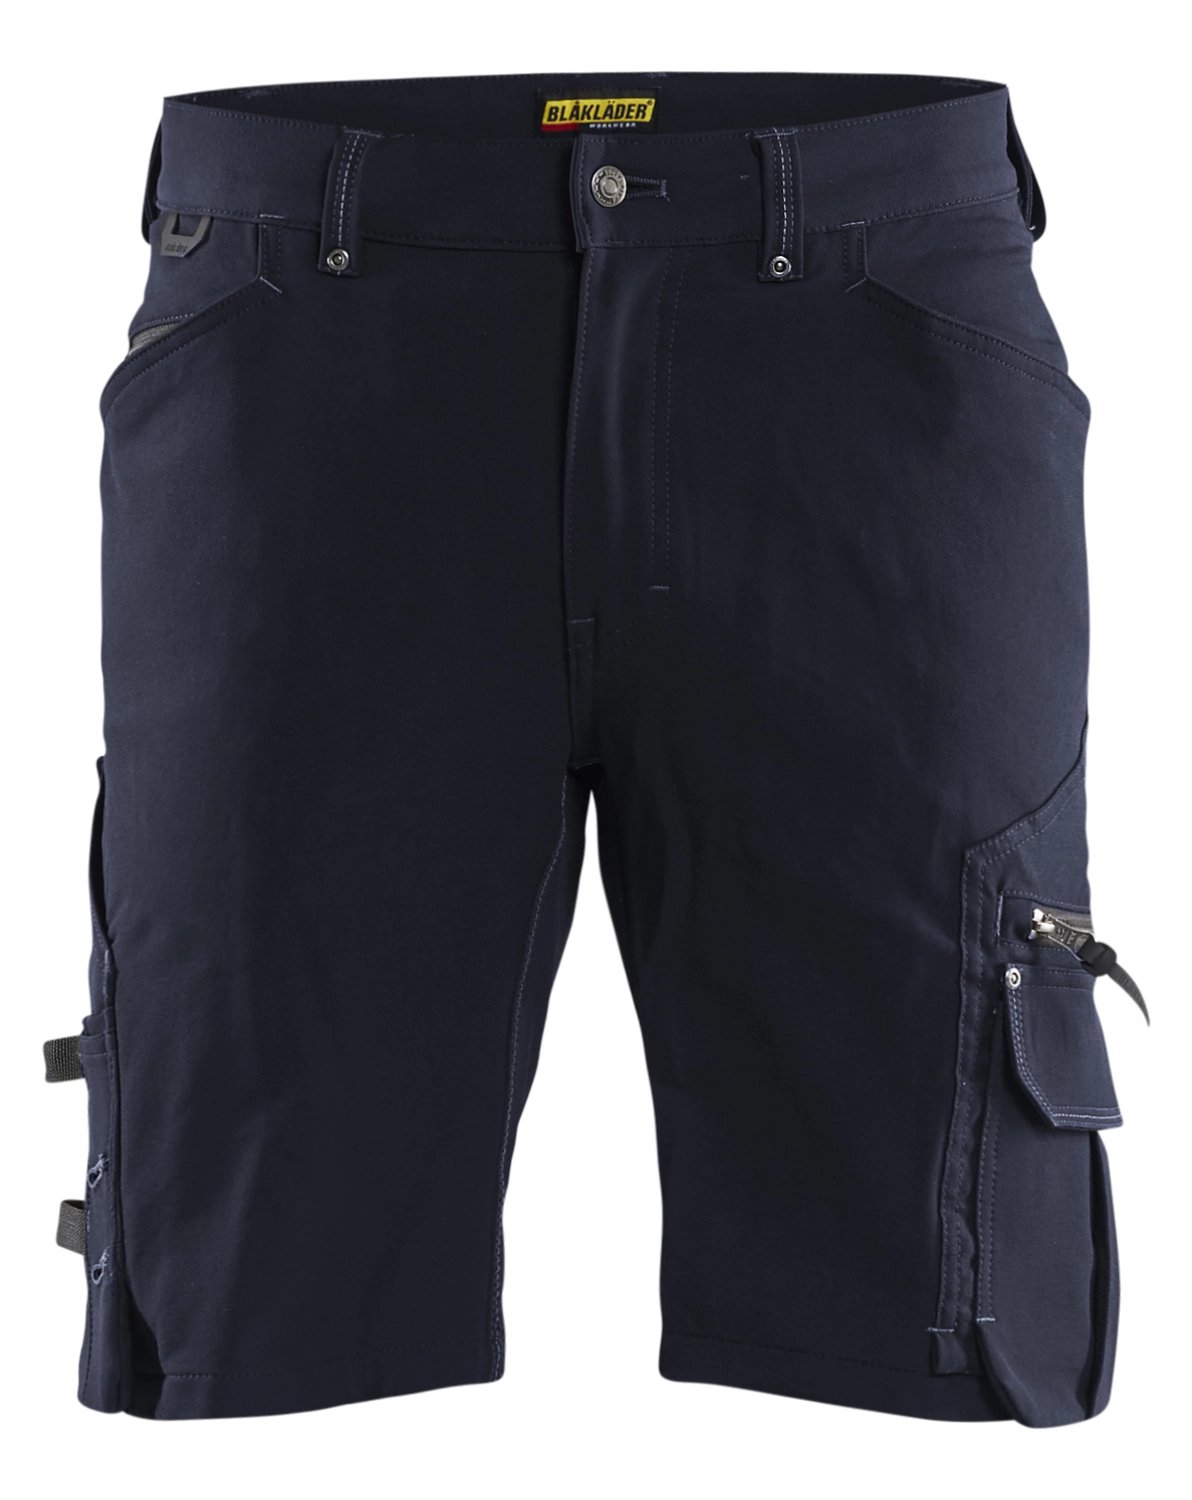 Blåkläder Short X1900 artisan stretch 4D sans poche flottante - C48 - Marine foncé/Noir